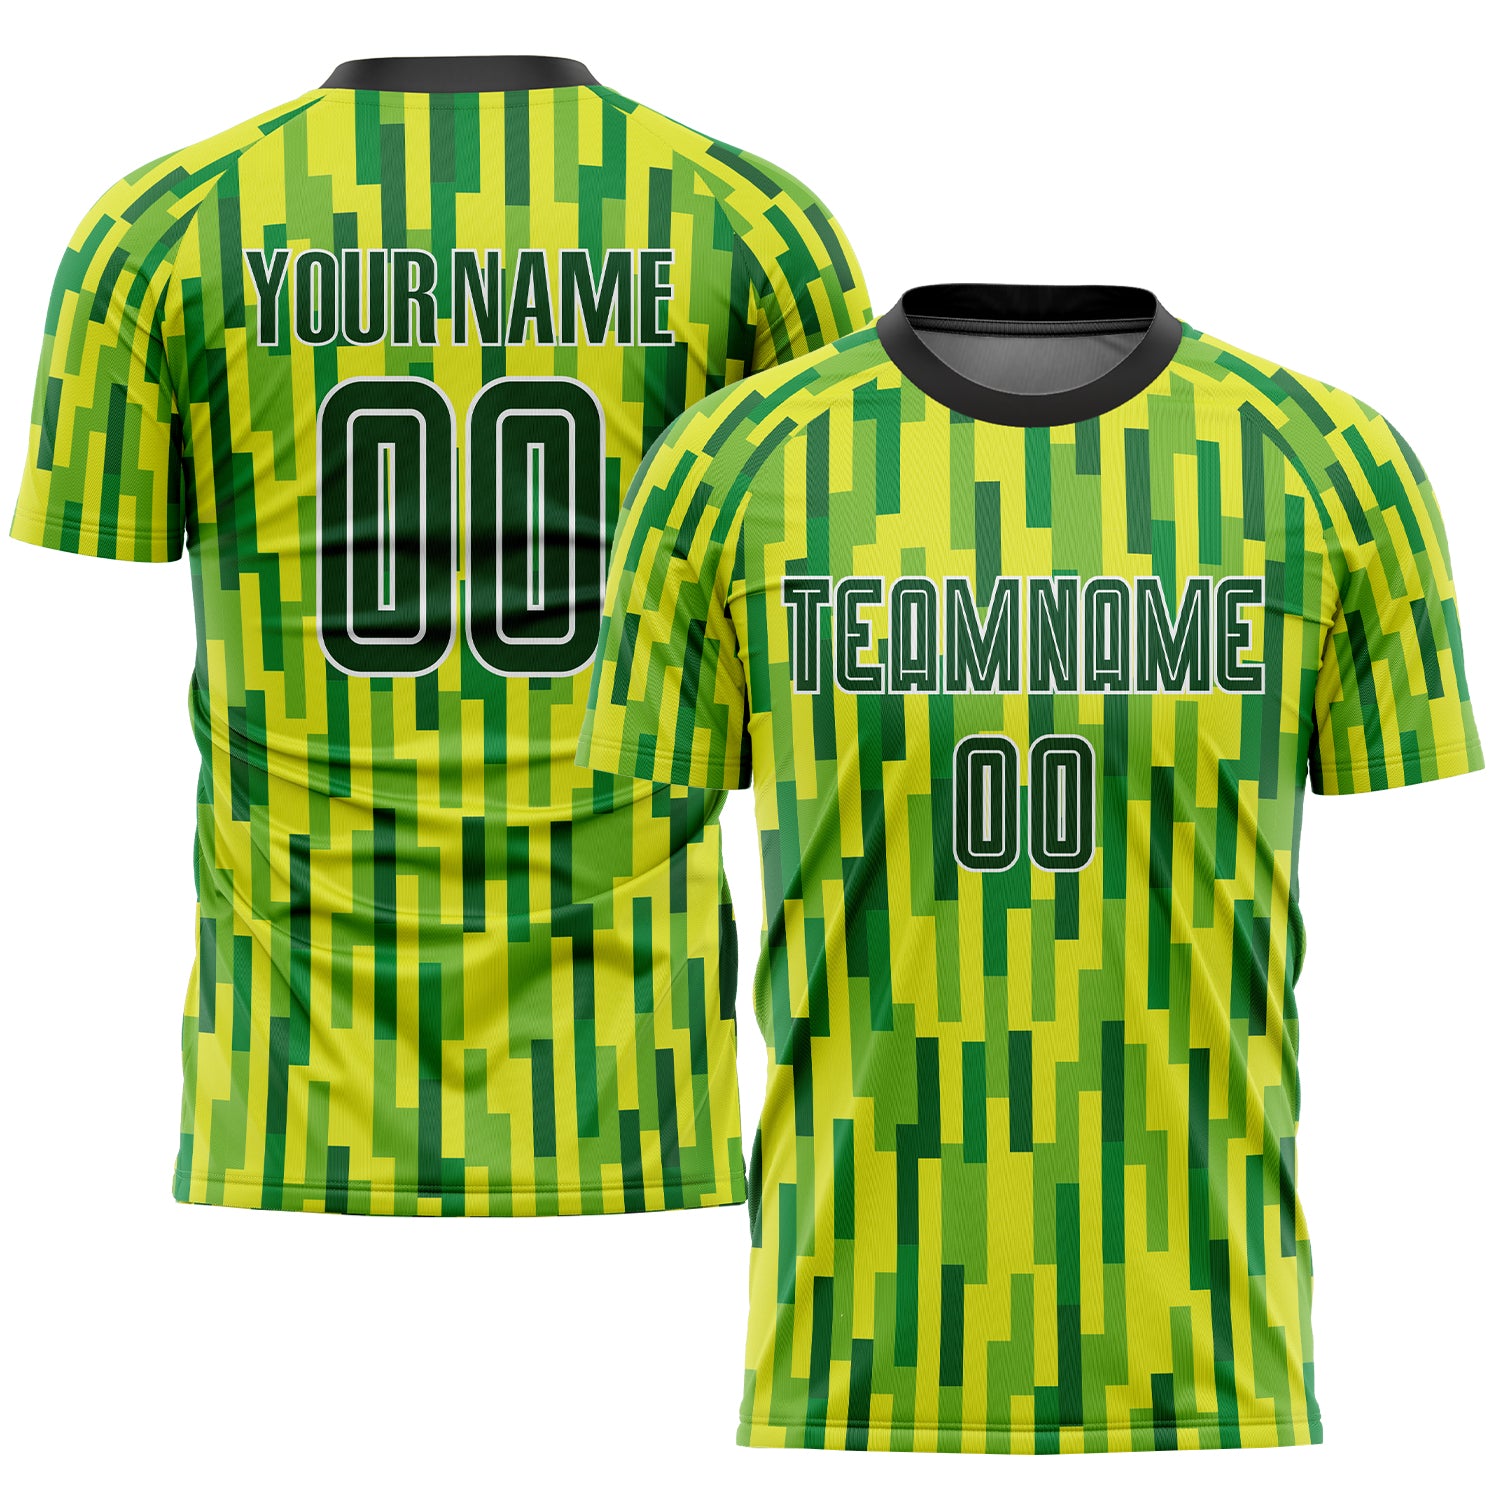 Vintage Neon Green - Women Custom Soccer Jerseys Plaid Design